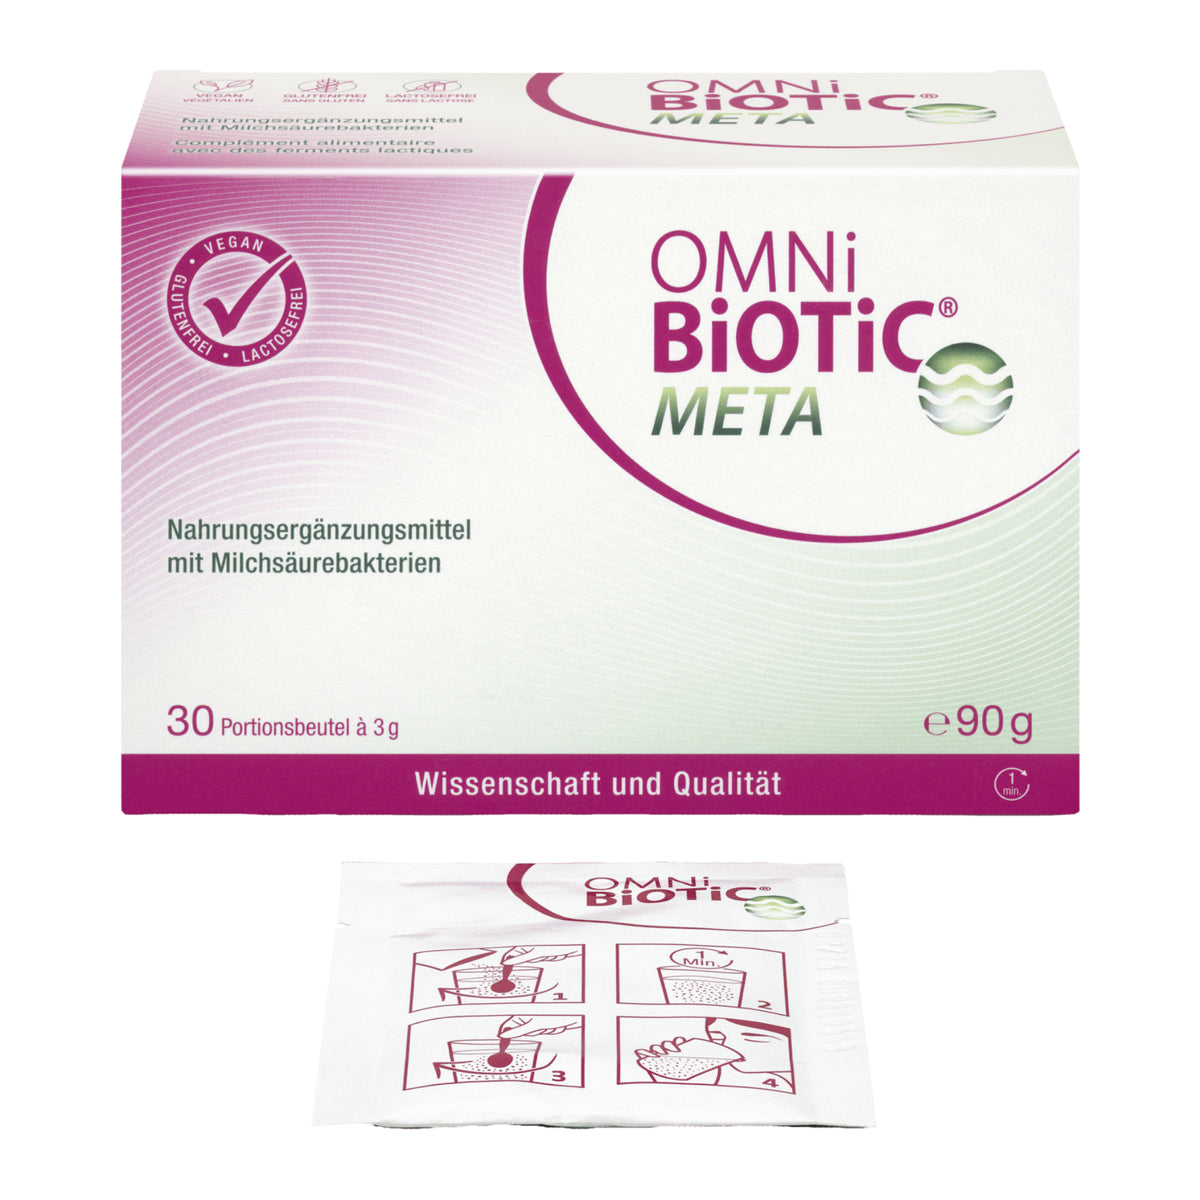 OMNi-BiOTiC® Meta 30 x 3g (ersetzt Hetox light)